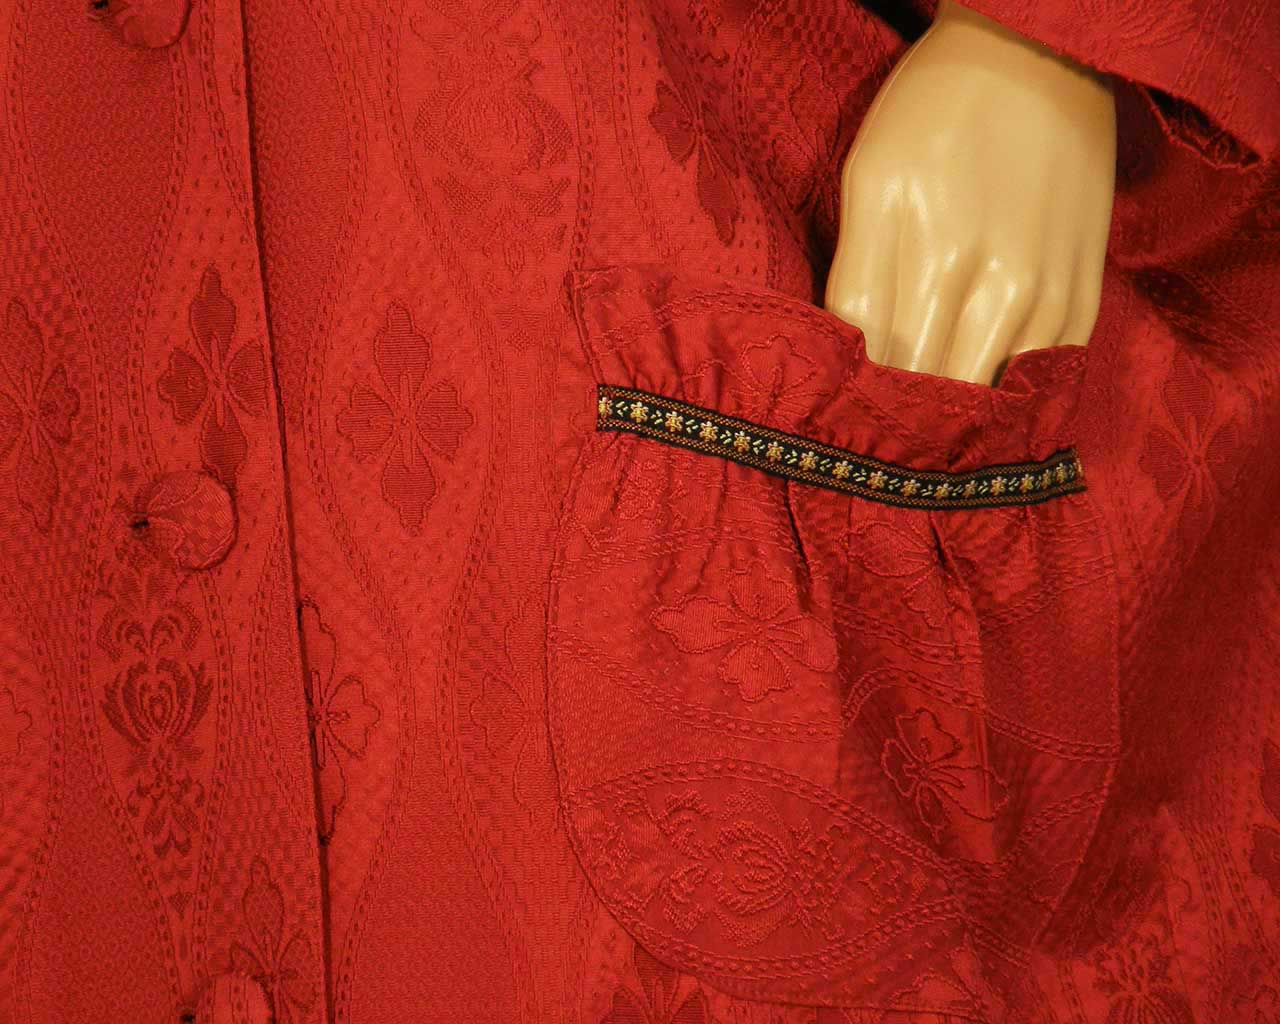 Tombi-shaped coat of kimono coat fabric